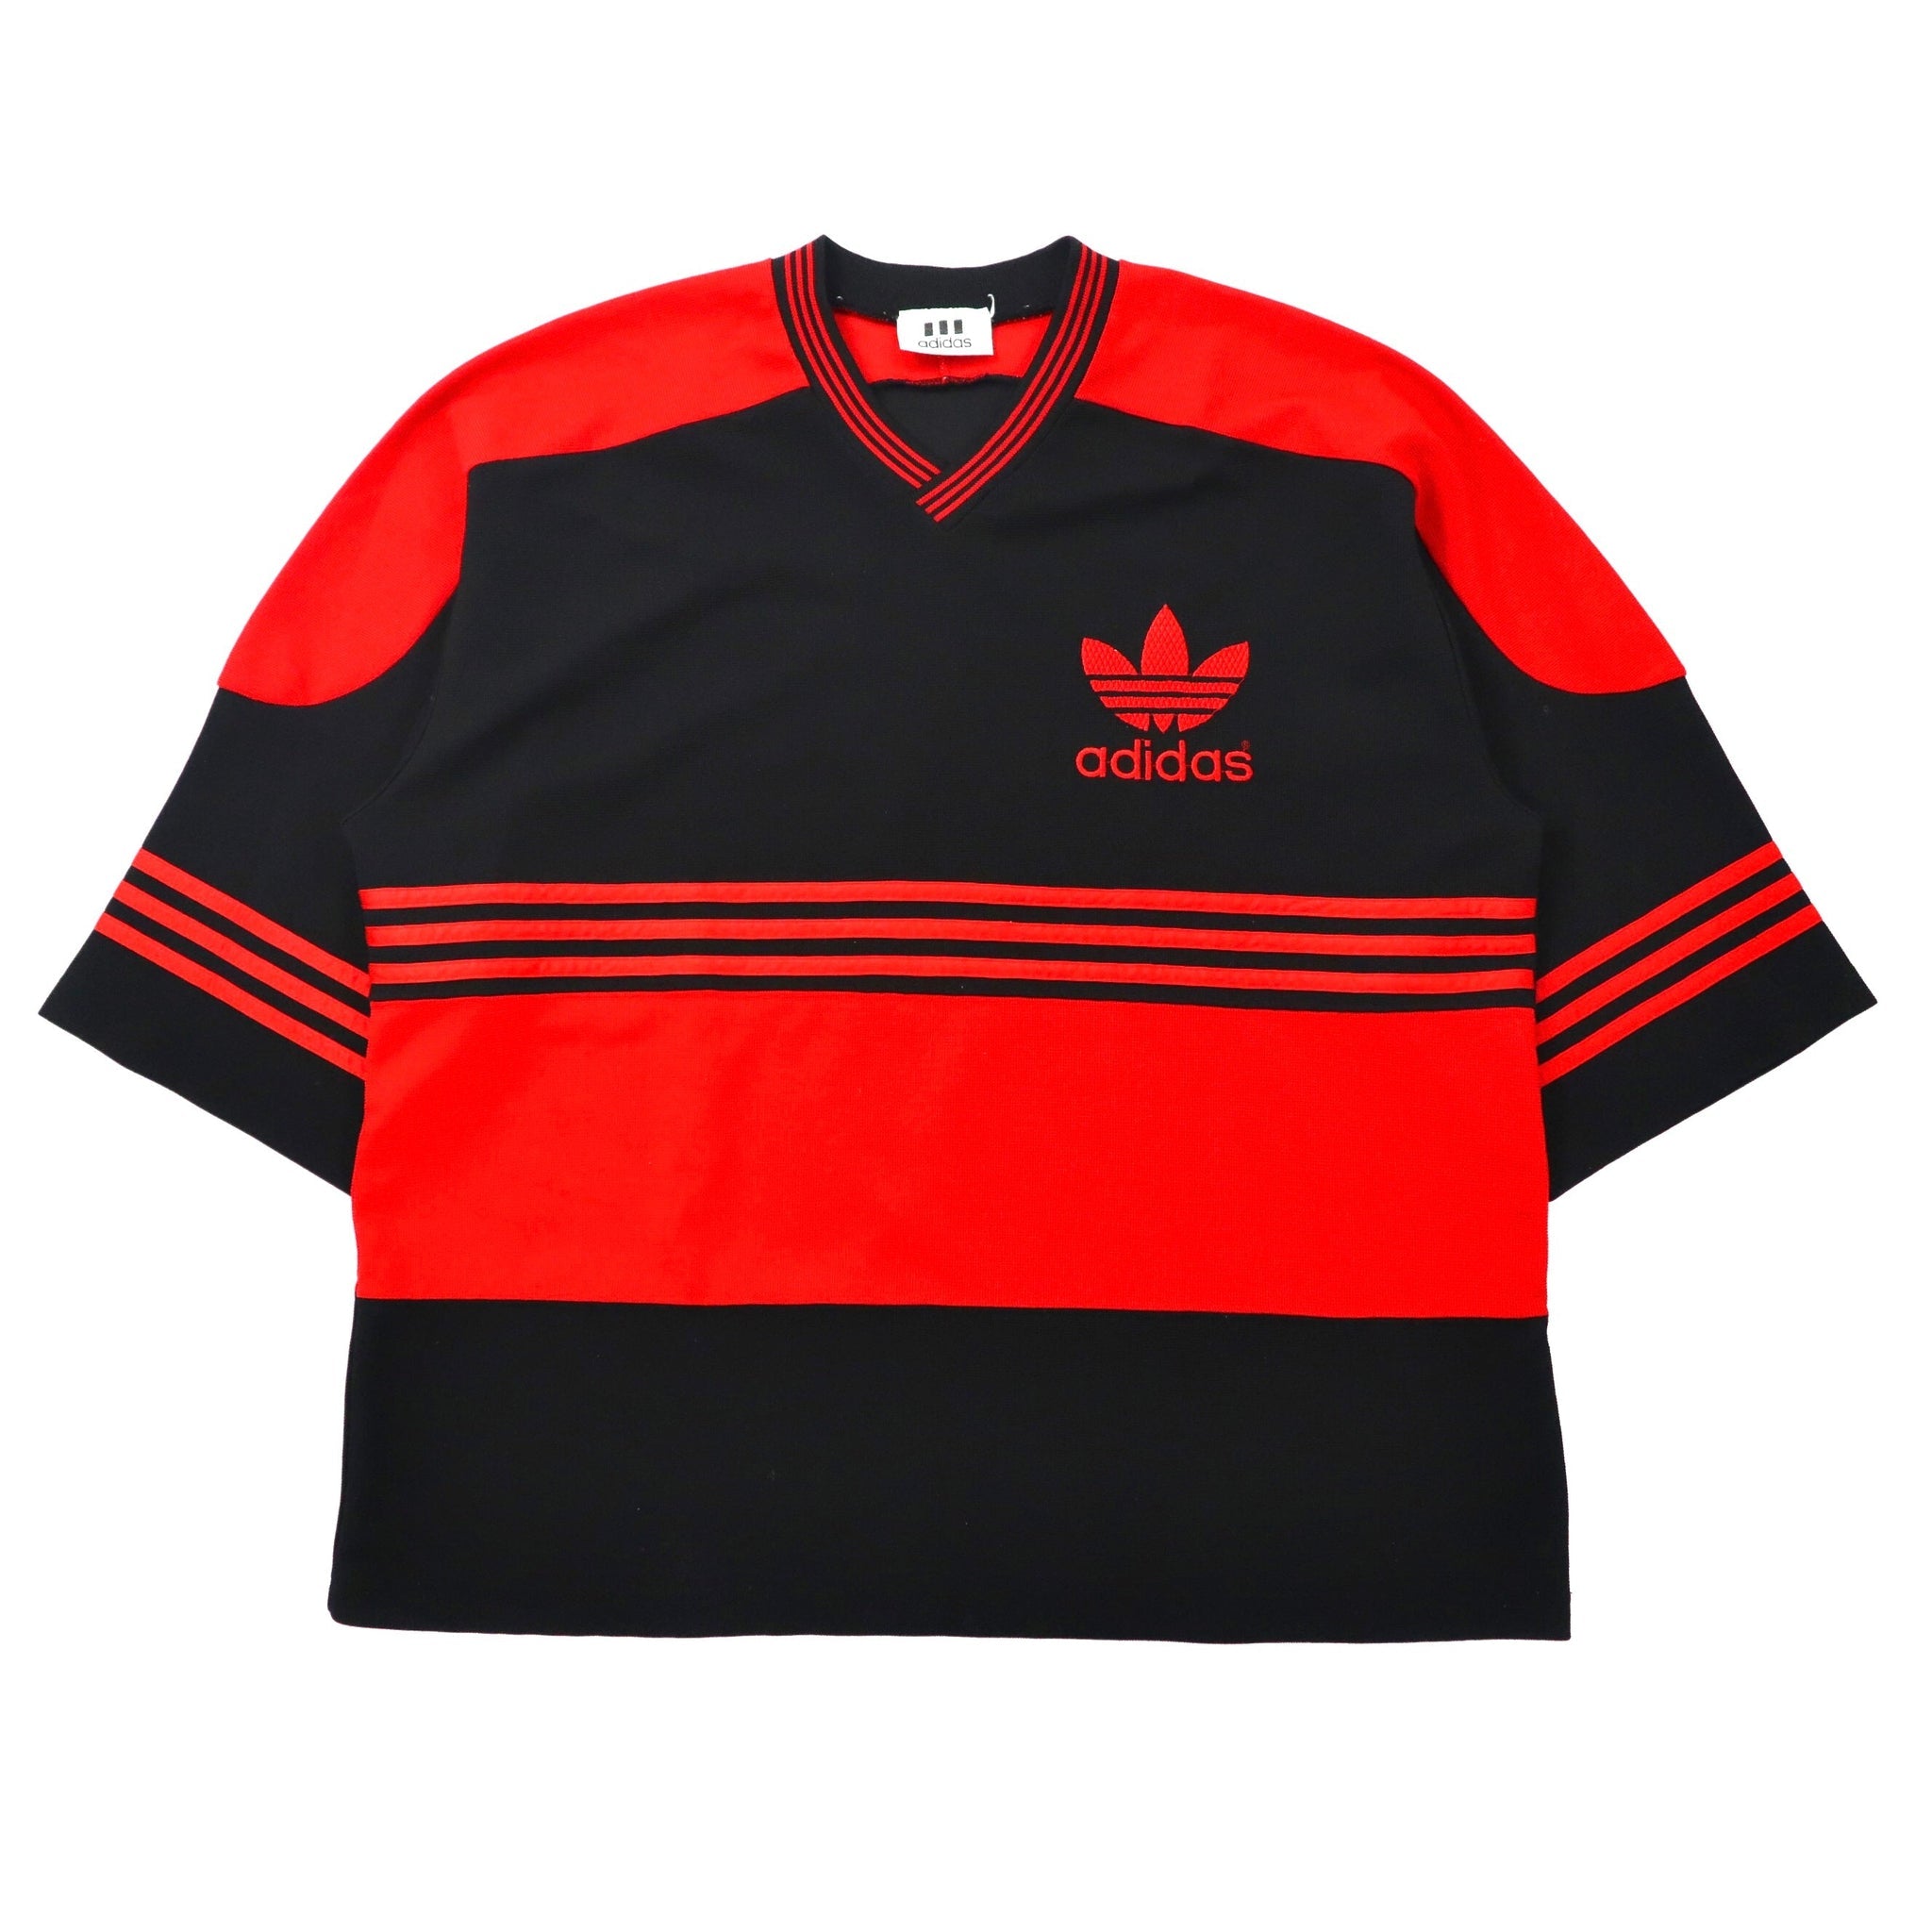 Adidas Big Size Game Shirt XL Black Polyester Trefoil Logo 